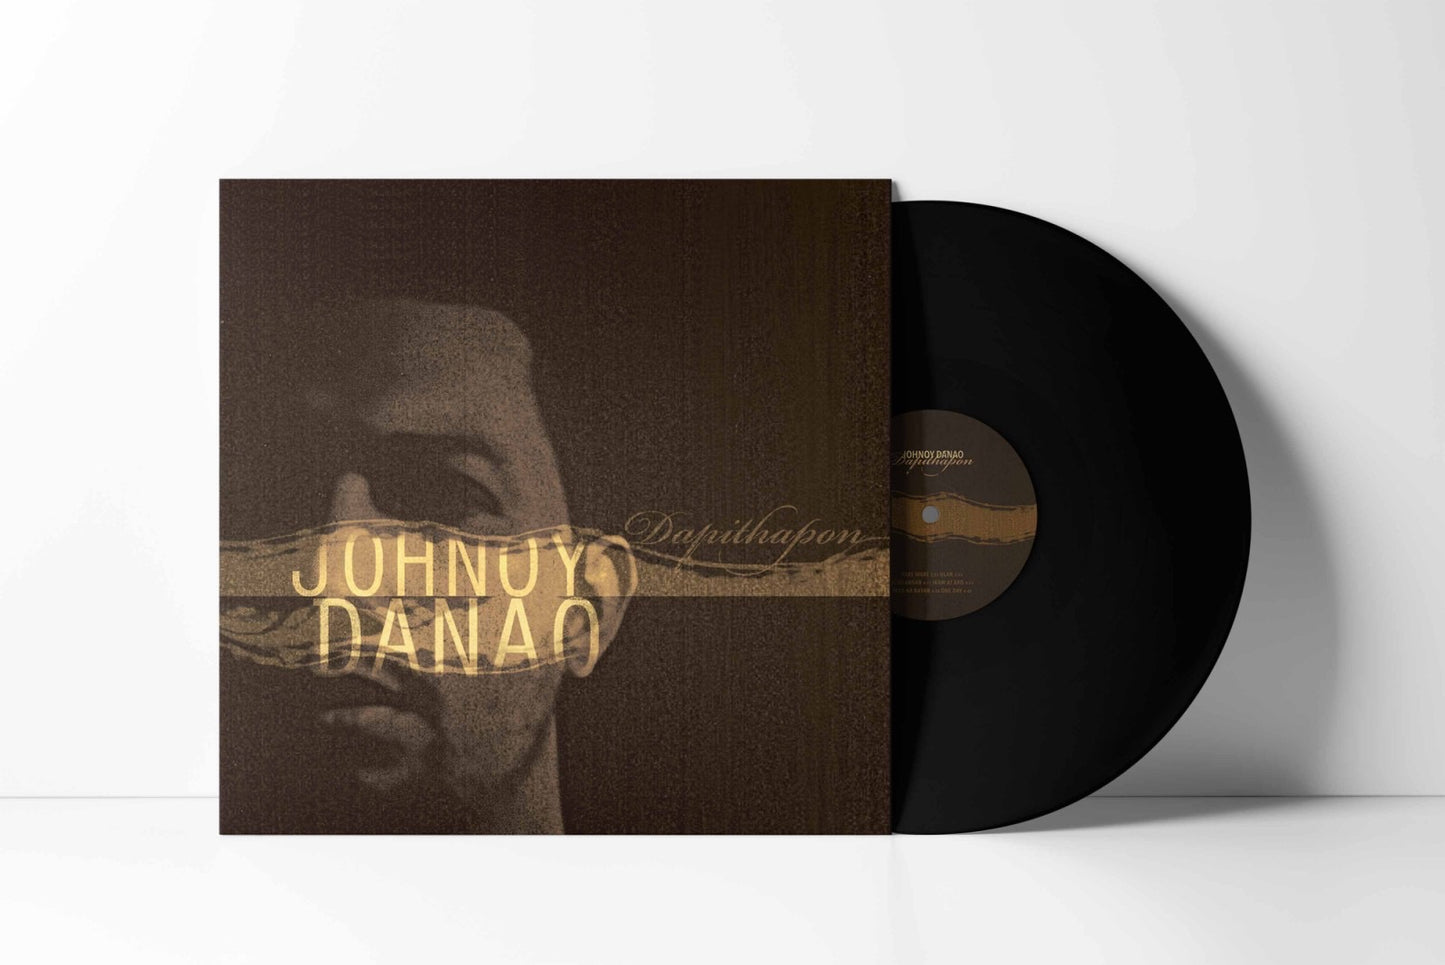 Johnoy Danao - Dapithapon LP (Backspacer Records)